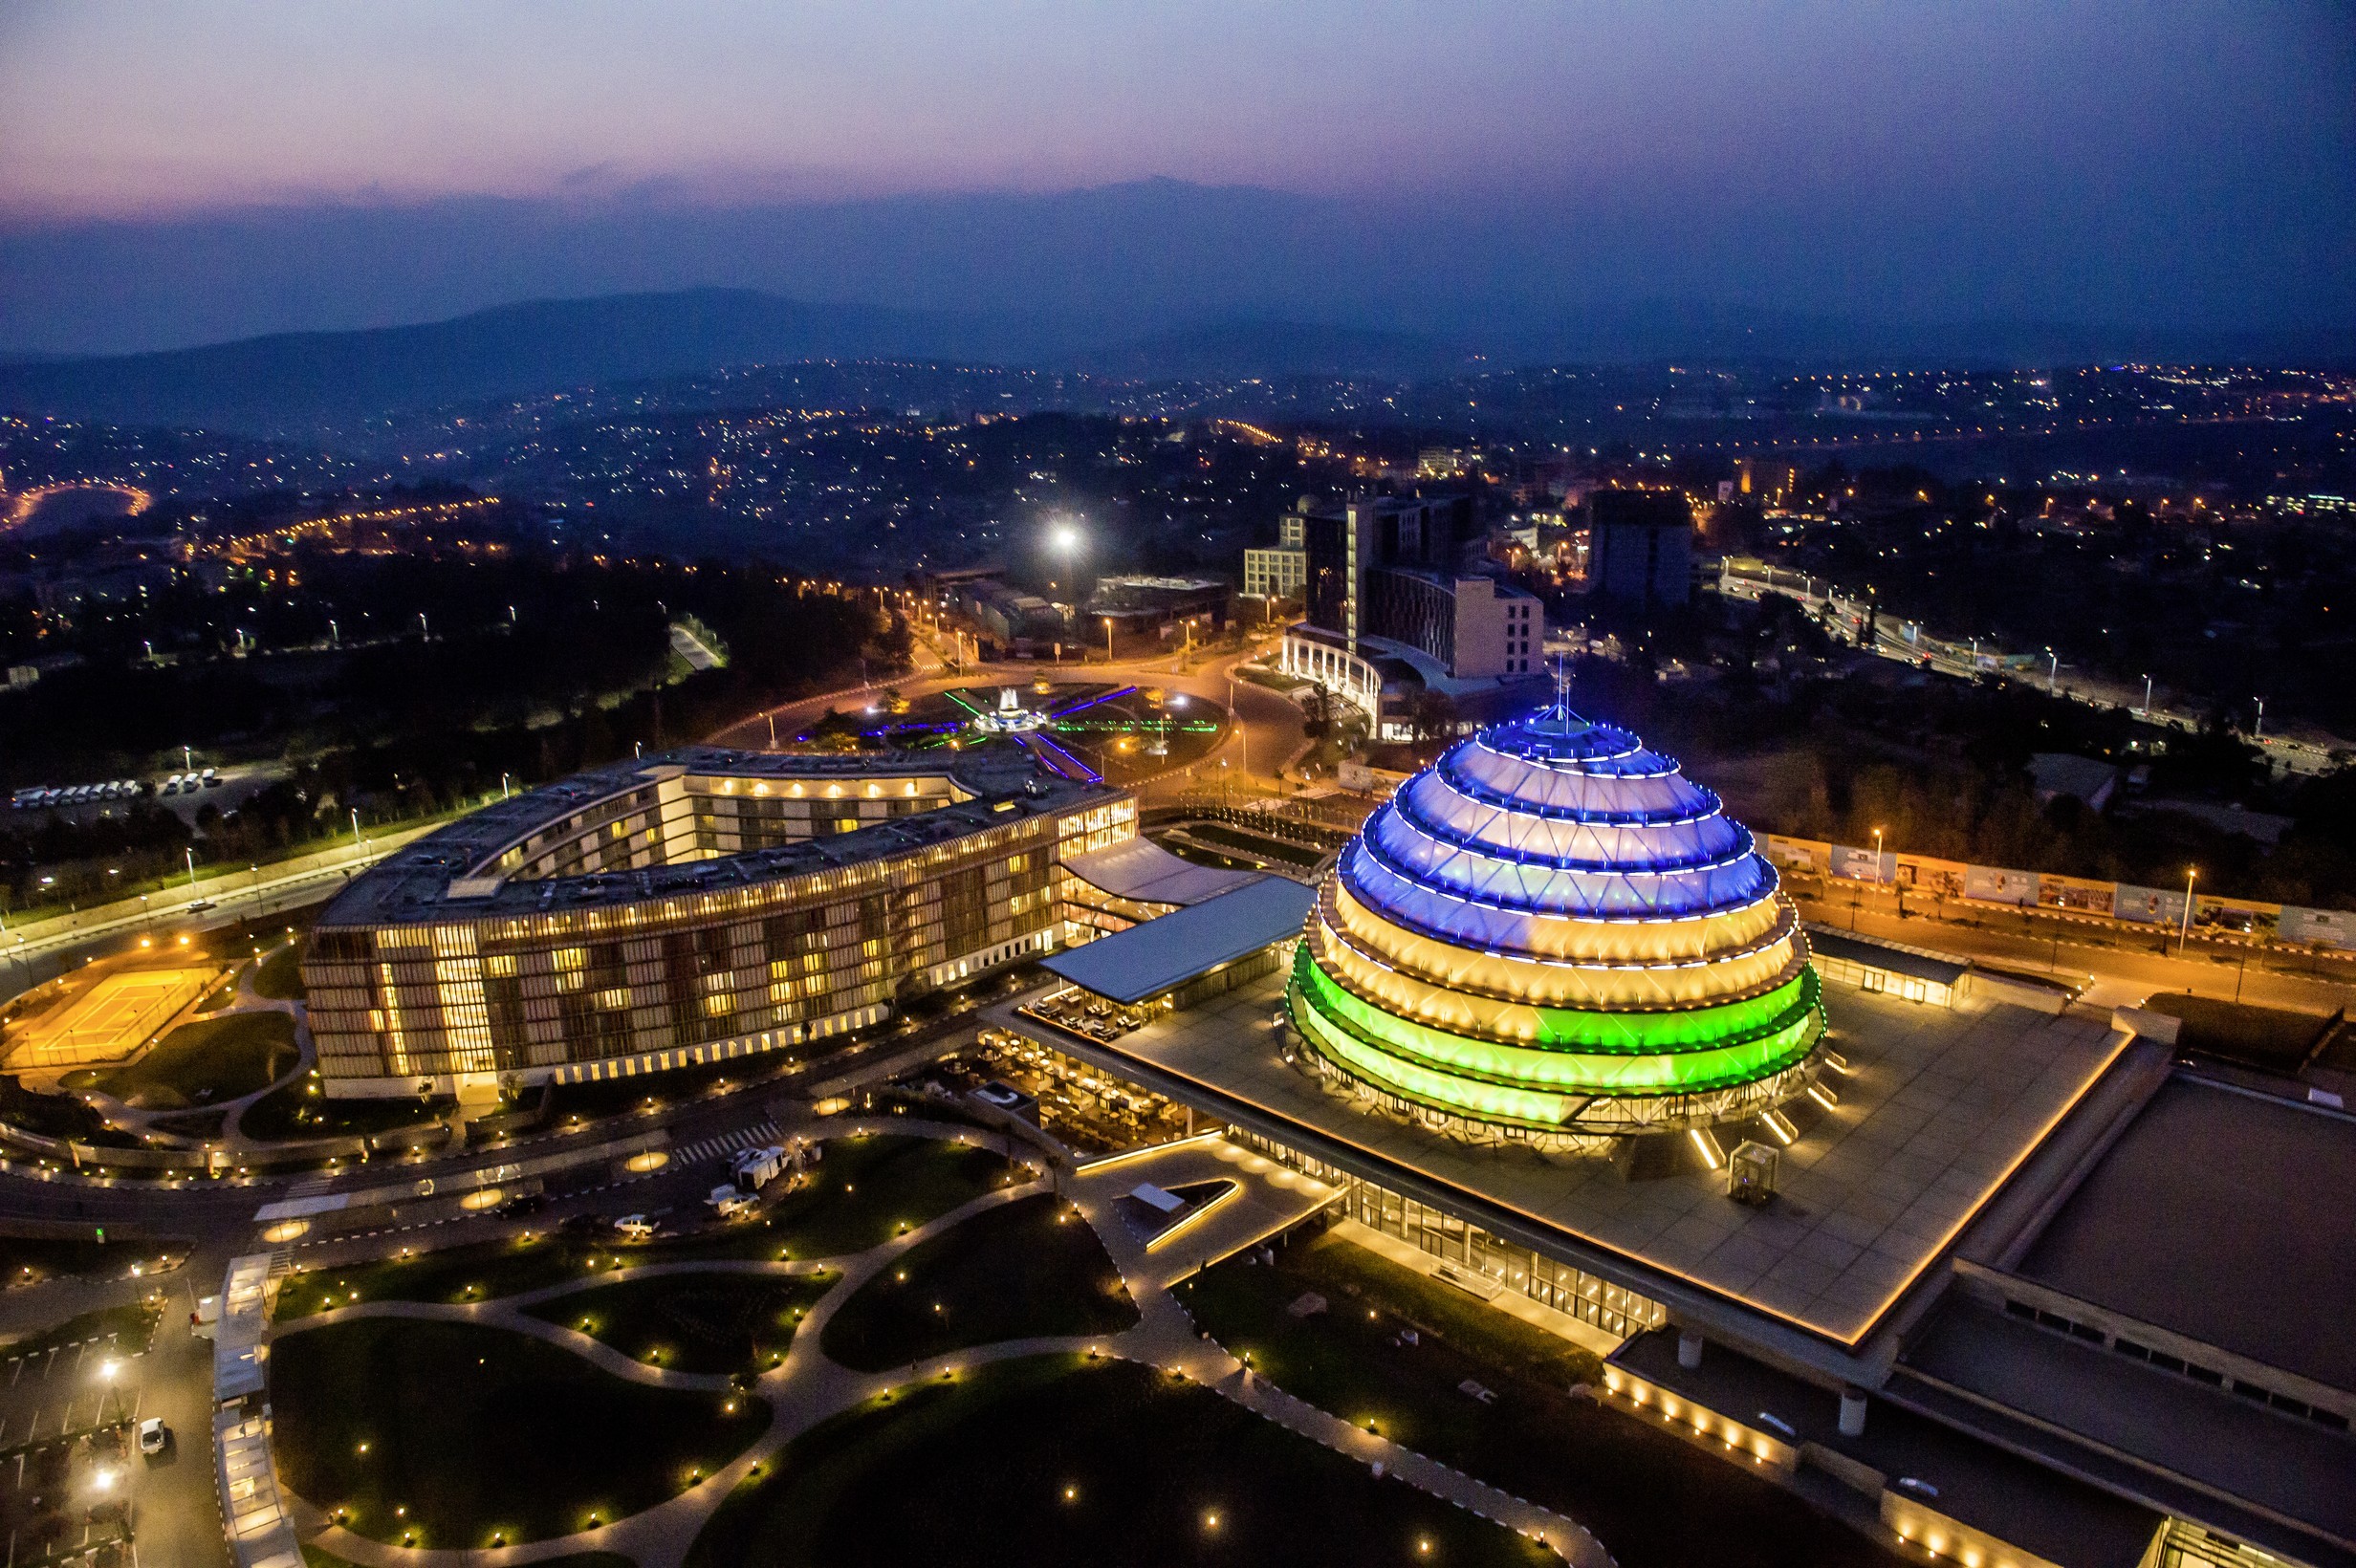 Kigali Convention Centre | LinkedIn